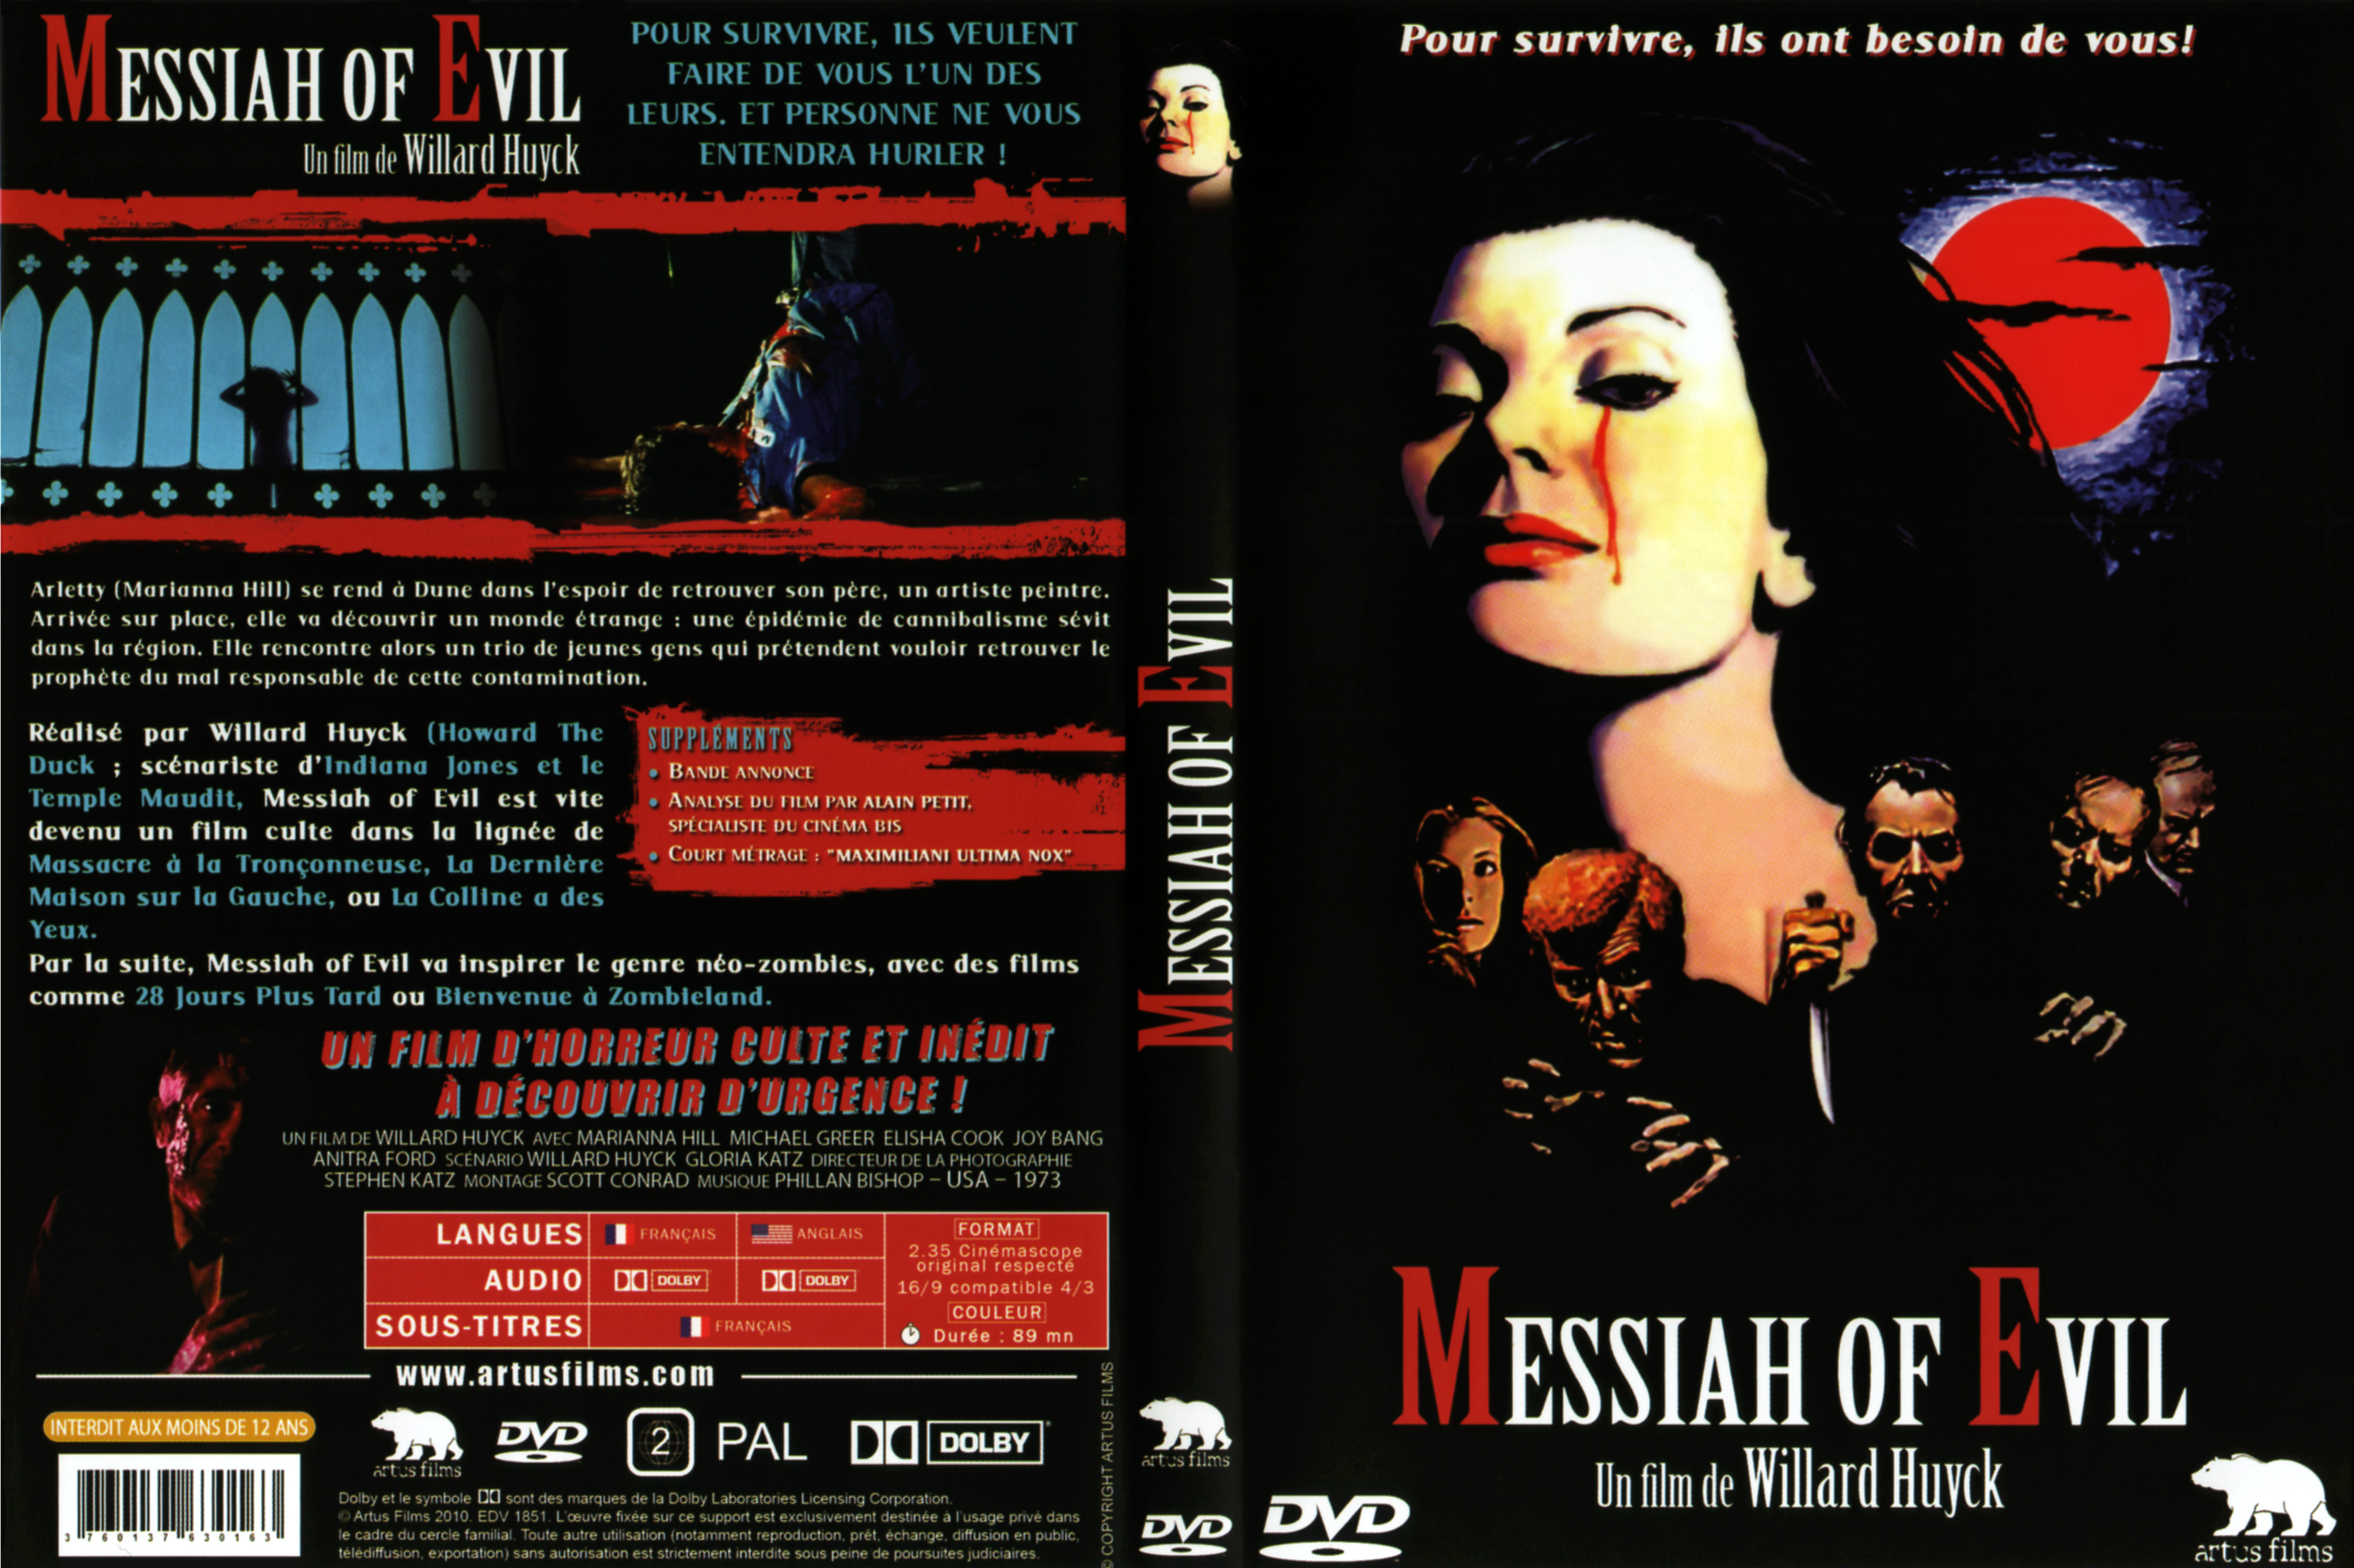 Jaquette DVD Messiah of evil